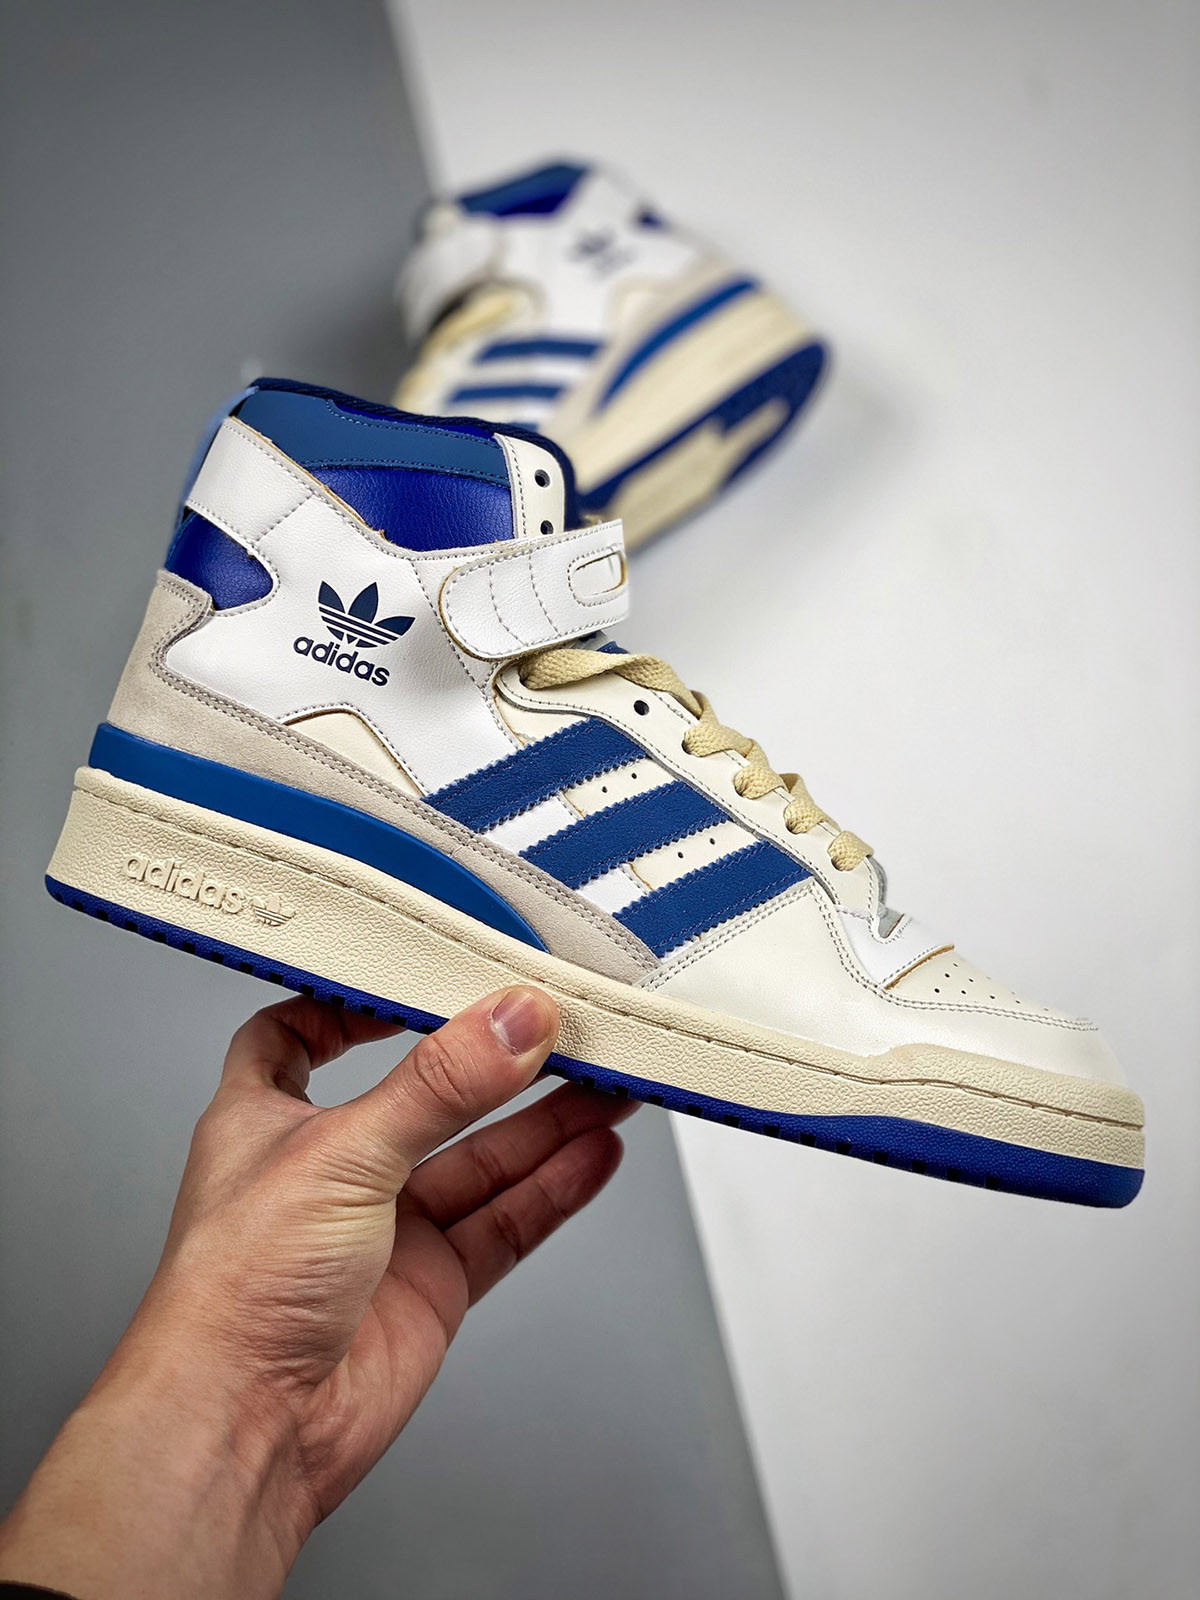 Adidas Forum 84 High OG Off White Bright Blue For Sale